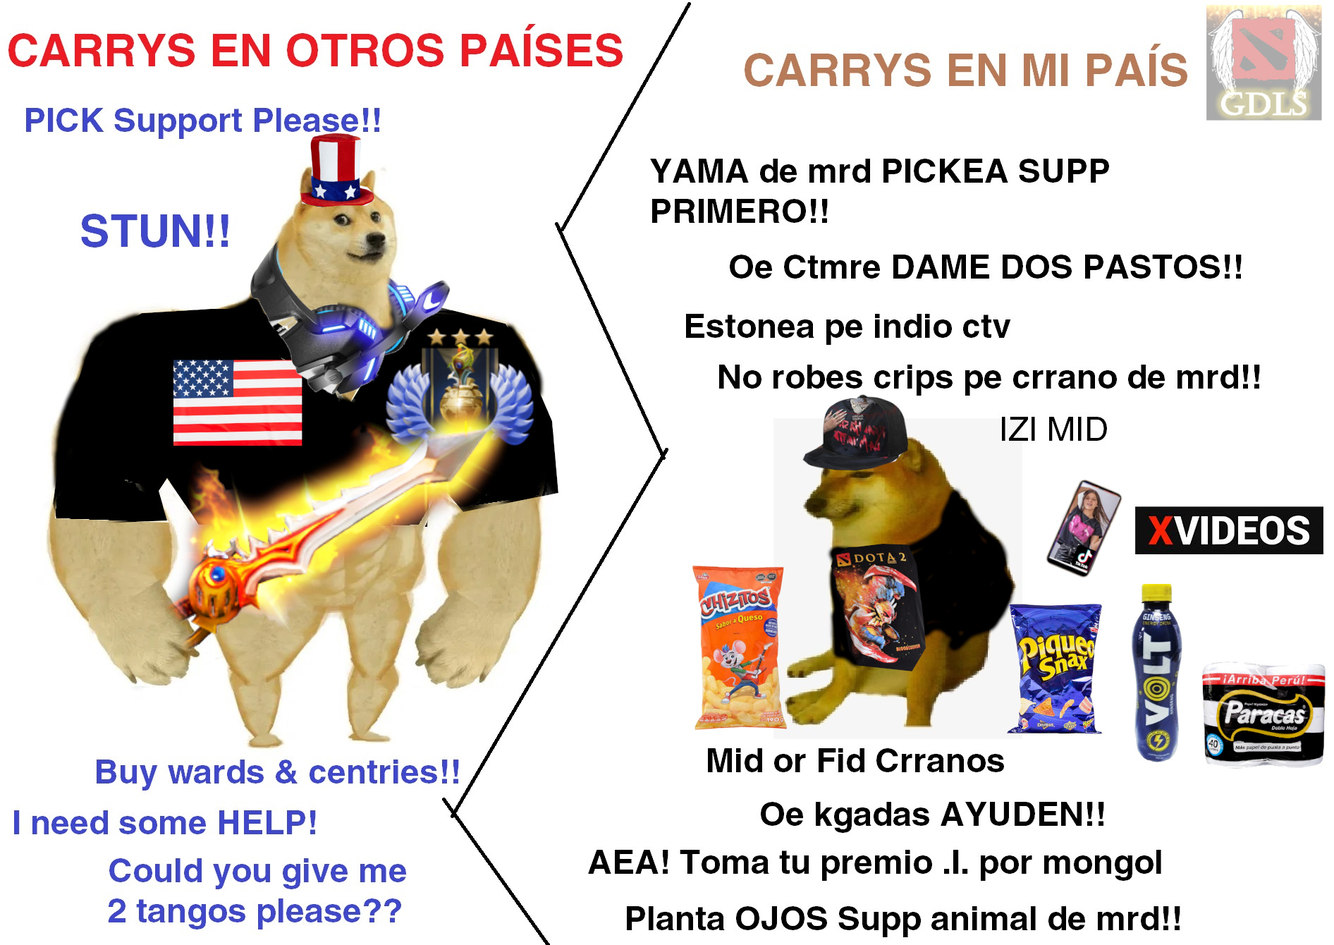 Carrys en otros países vs carrys en mi país - meme